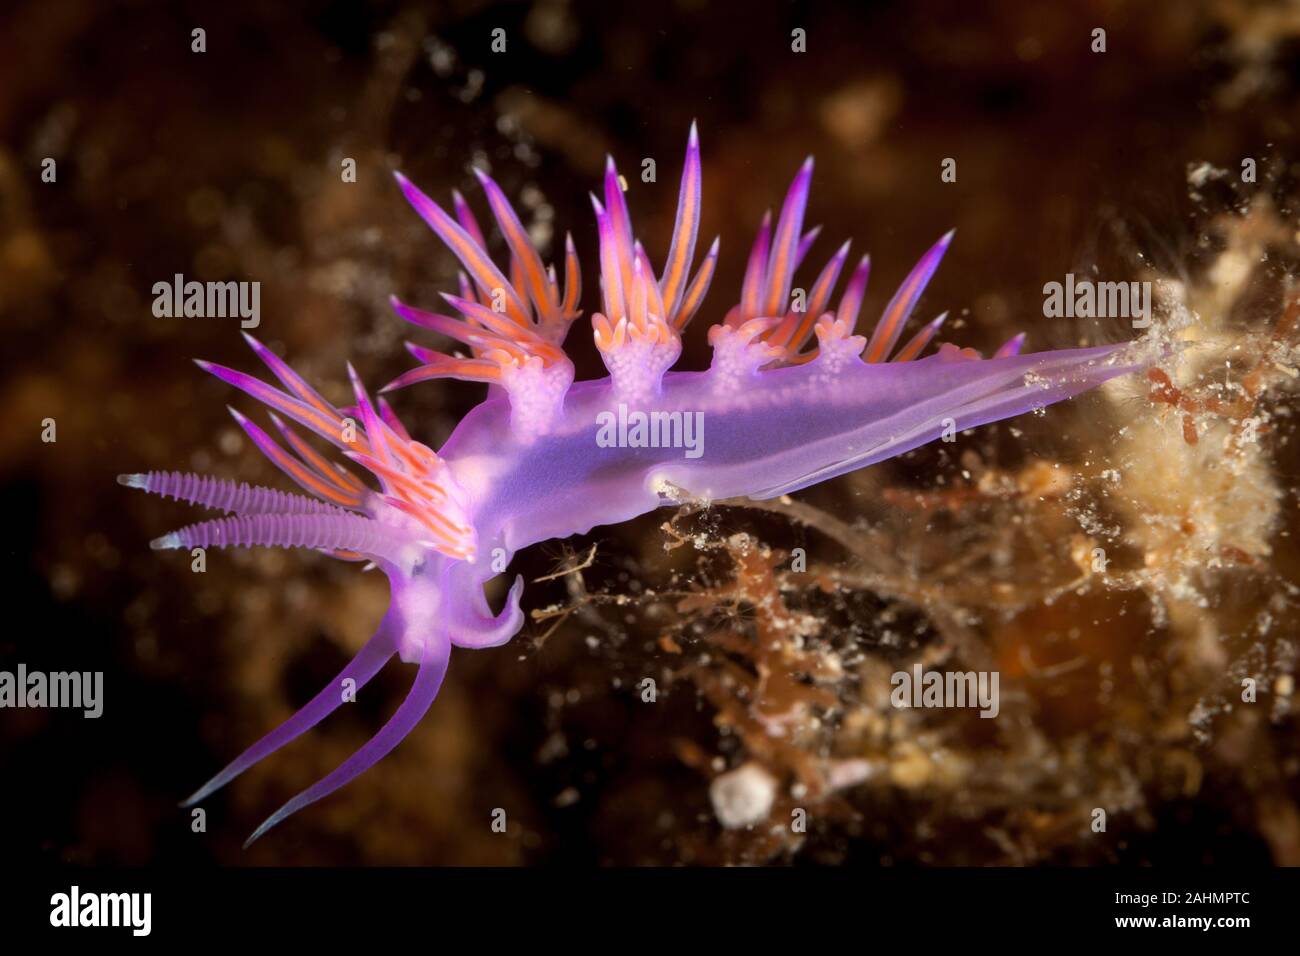 purple sea slug